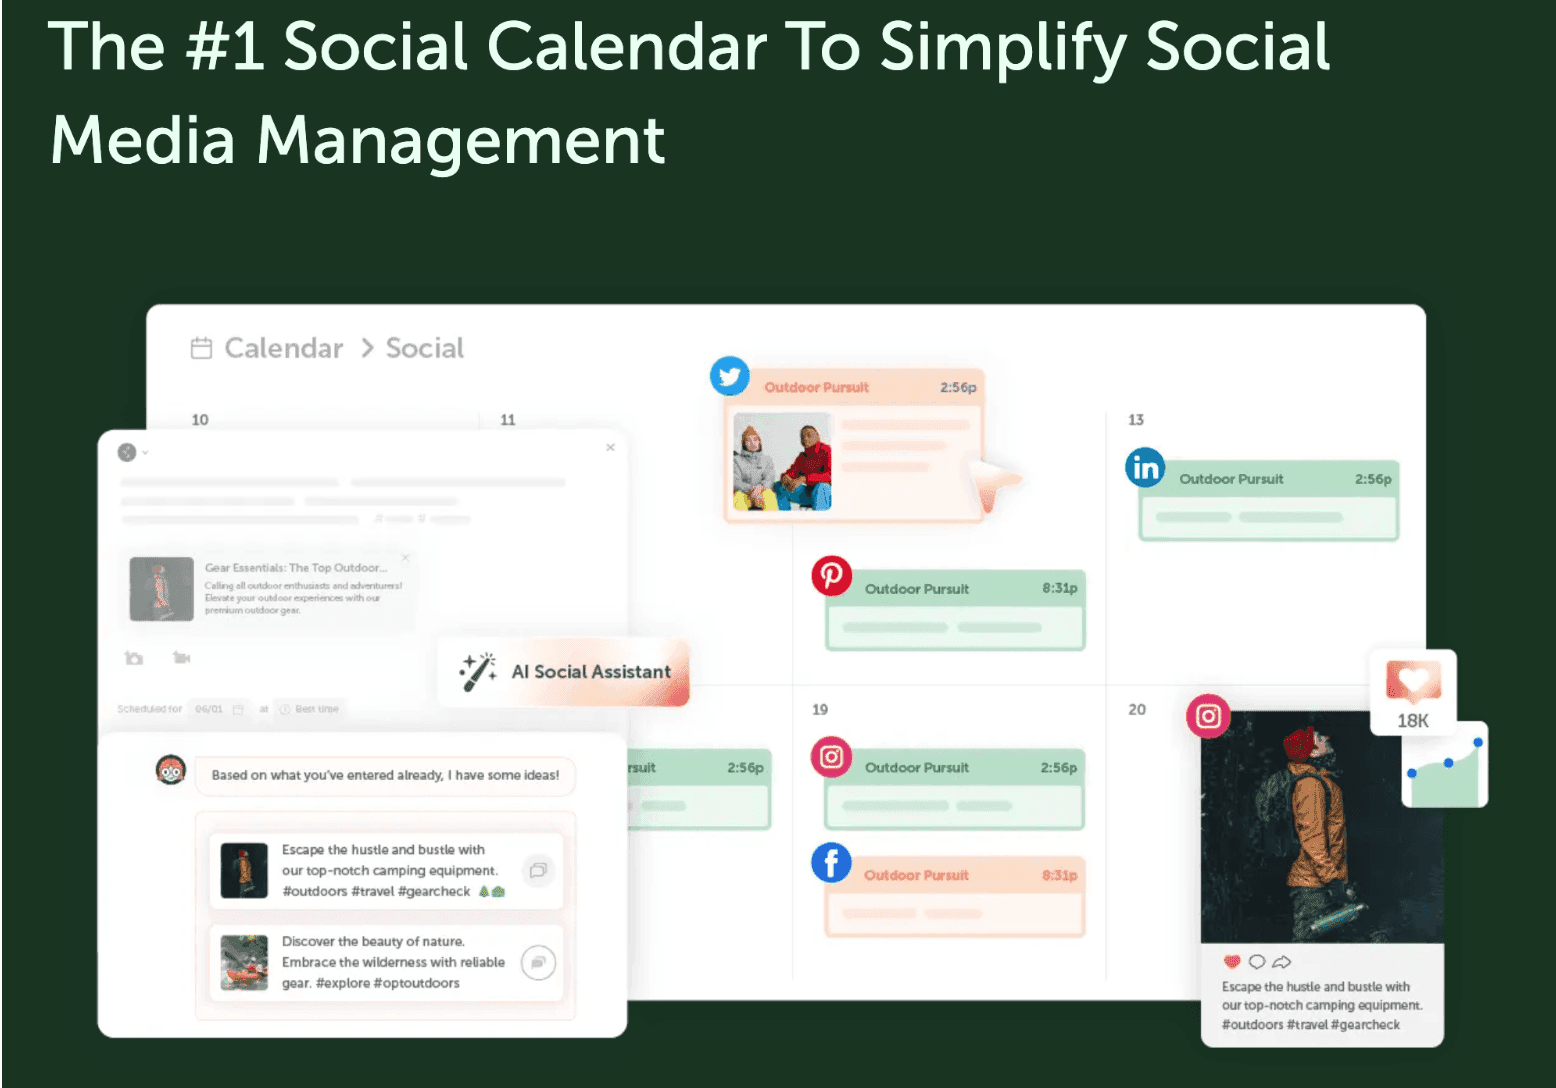 The #1 Social Calendar To Simplify Social Media Management